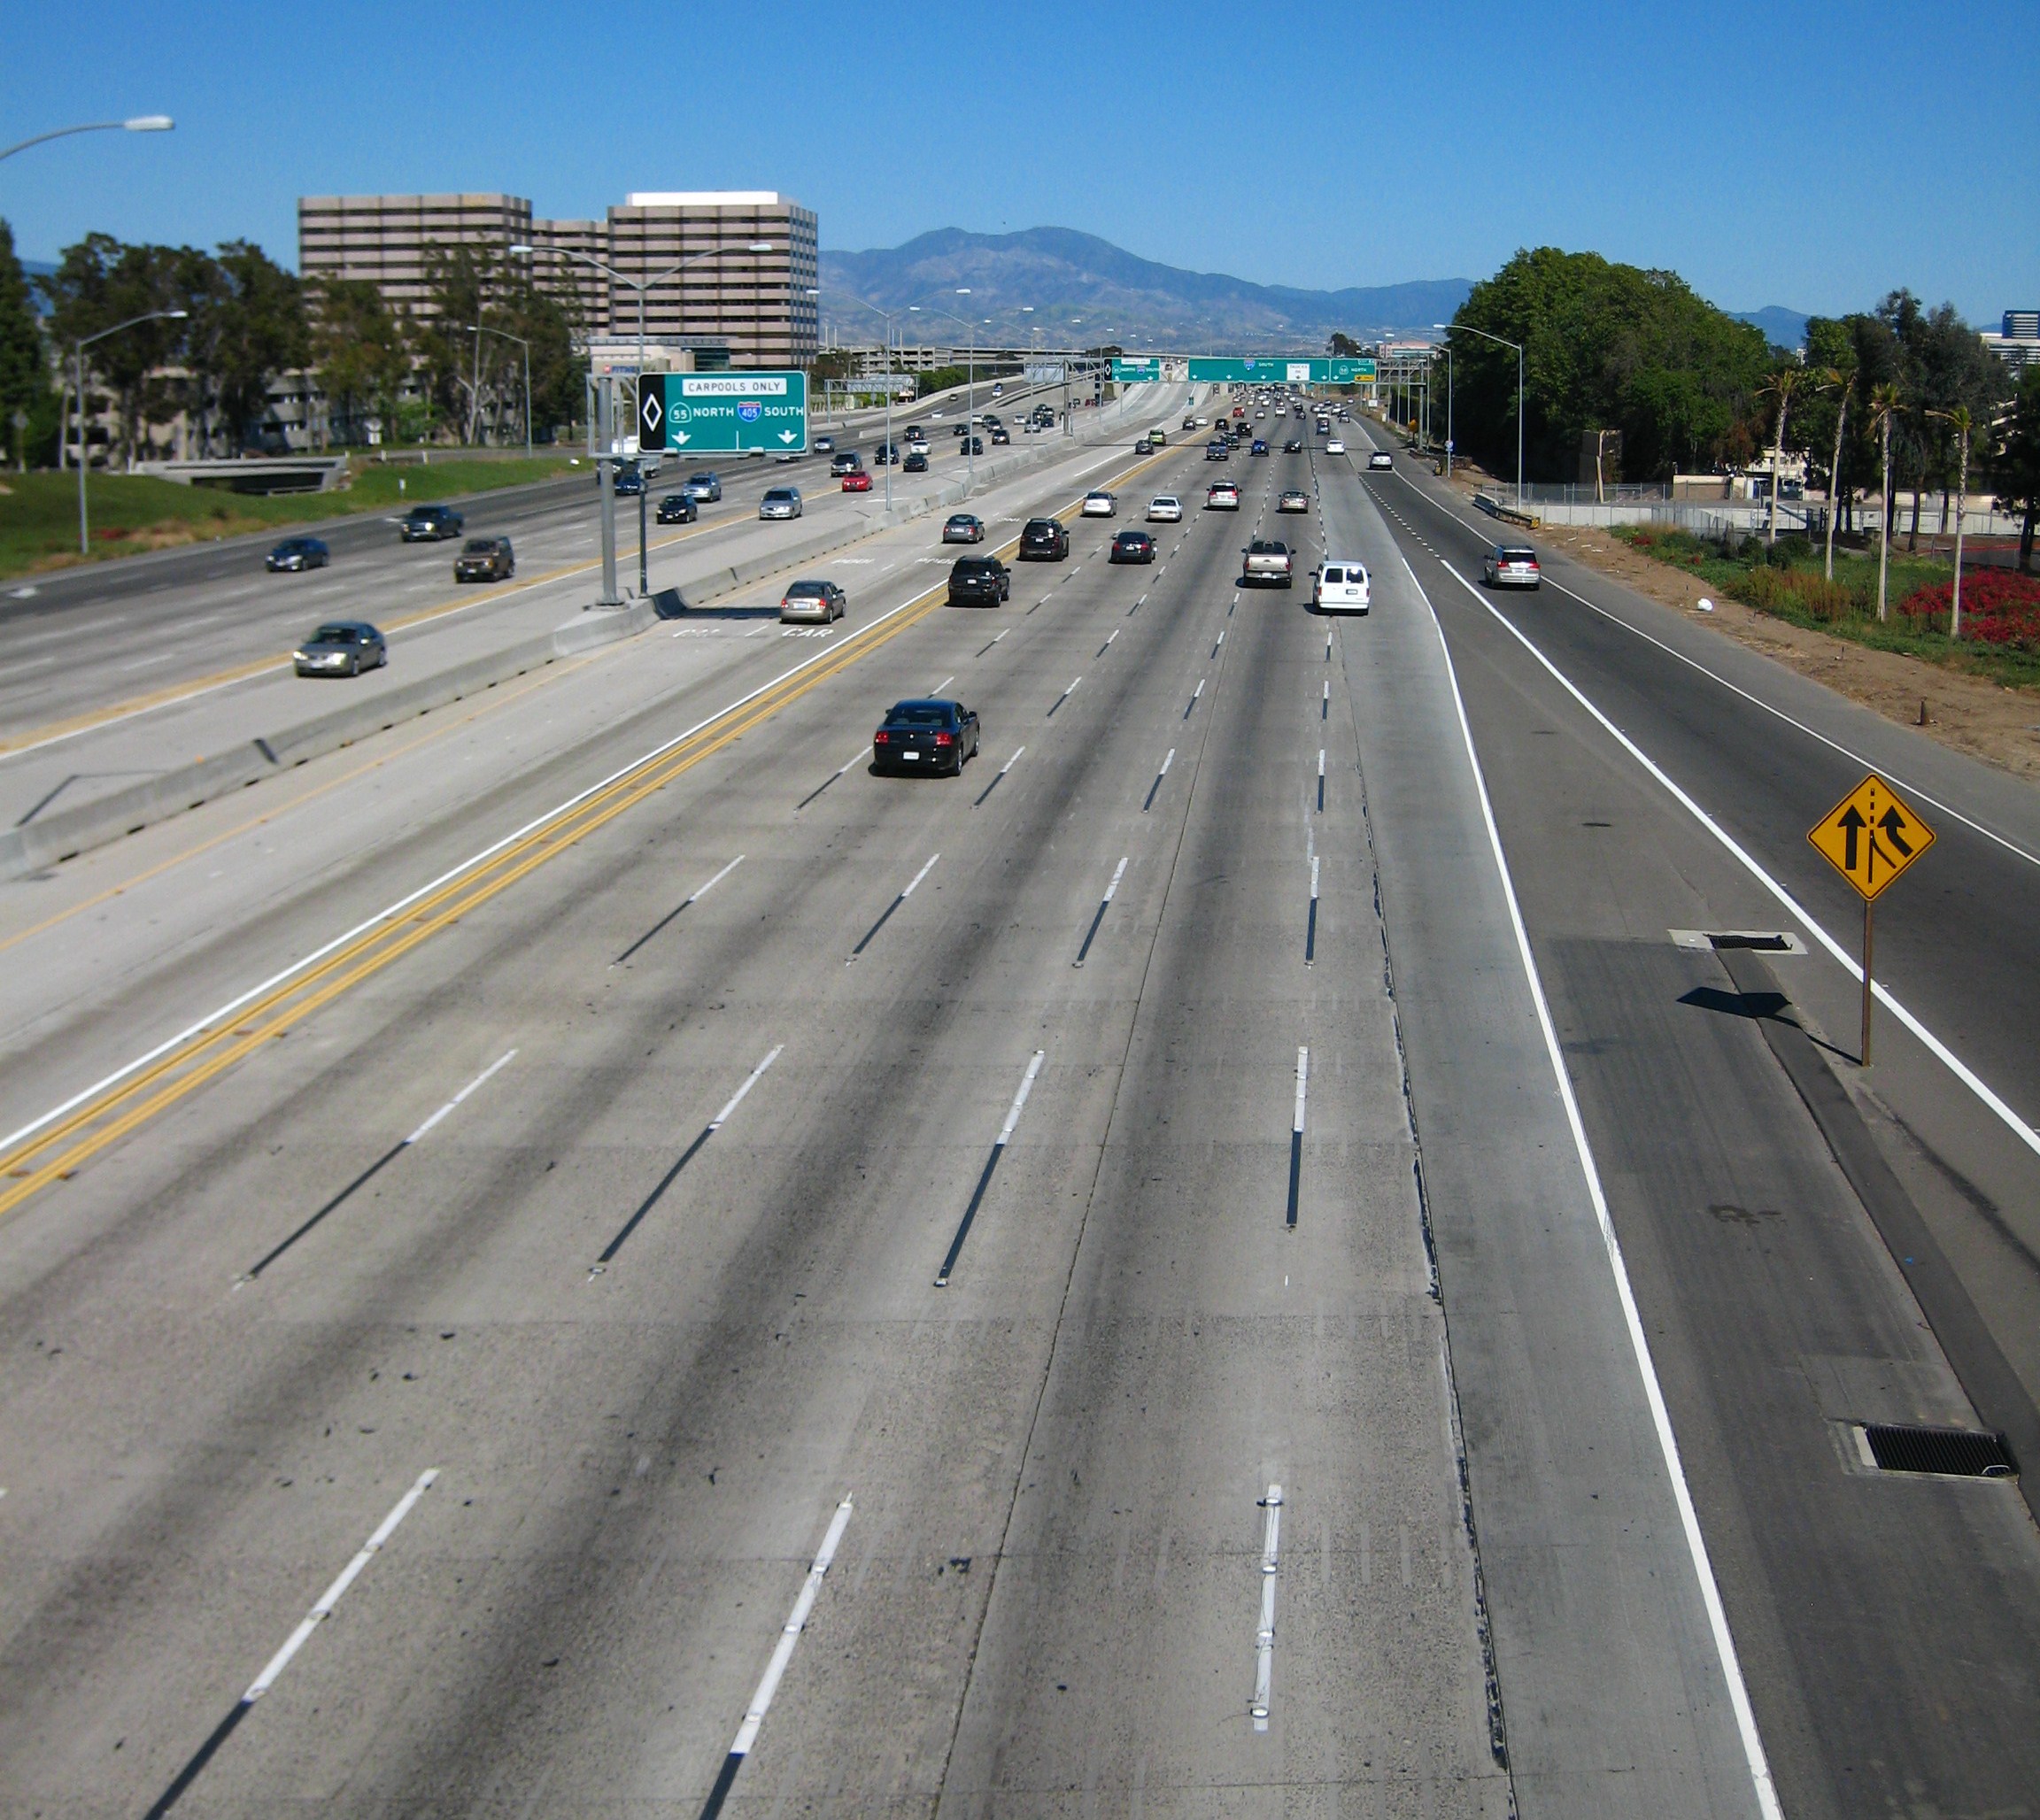 Interstate 405 at Costa Mesa